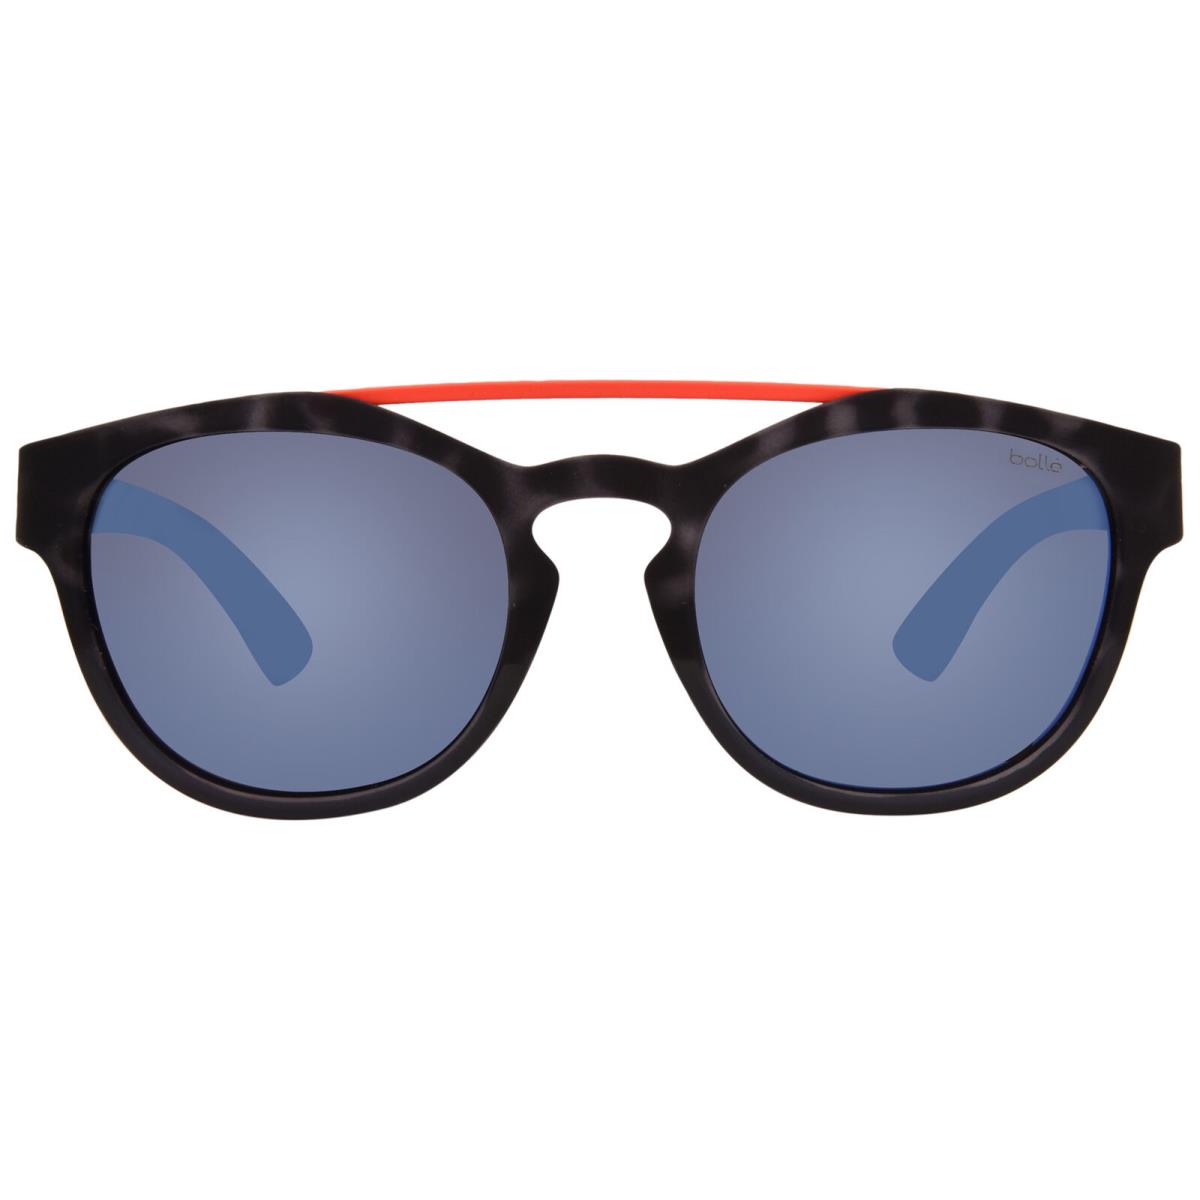 Bolle Boxton 12355 Sunglasses Black Tortoise Rubber/blue/red Round Shape 52mm